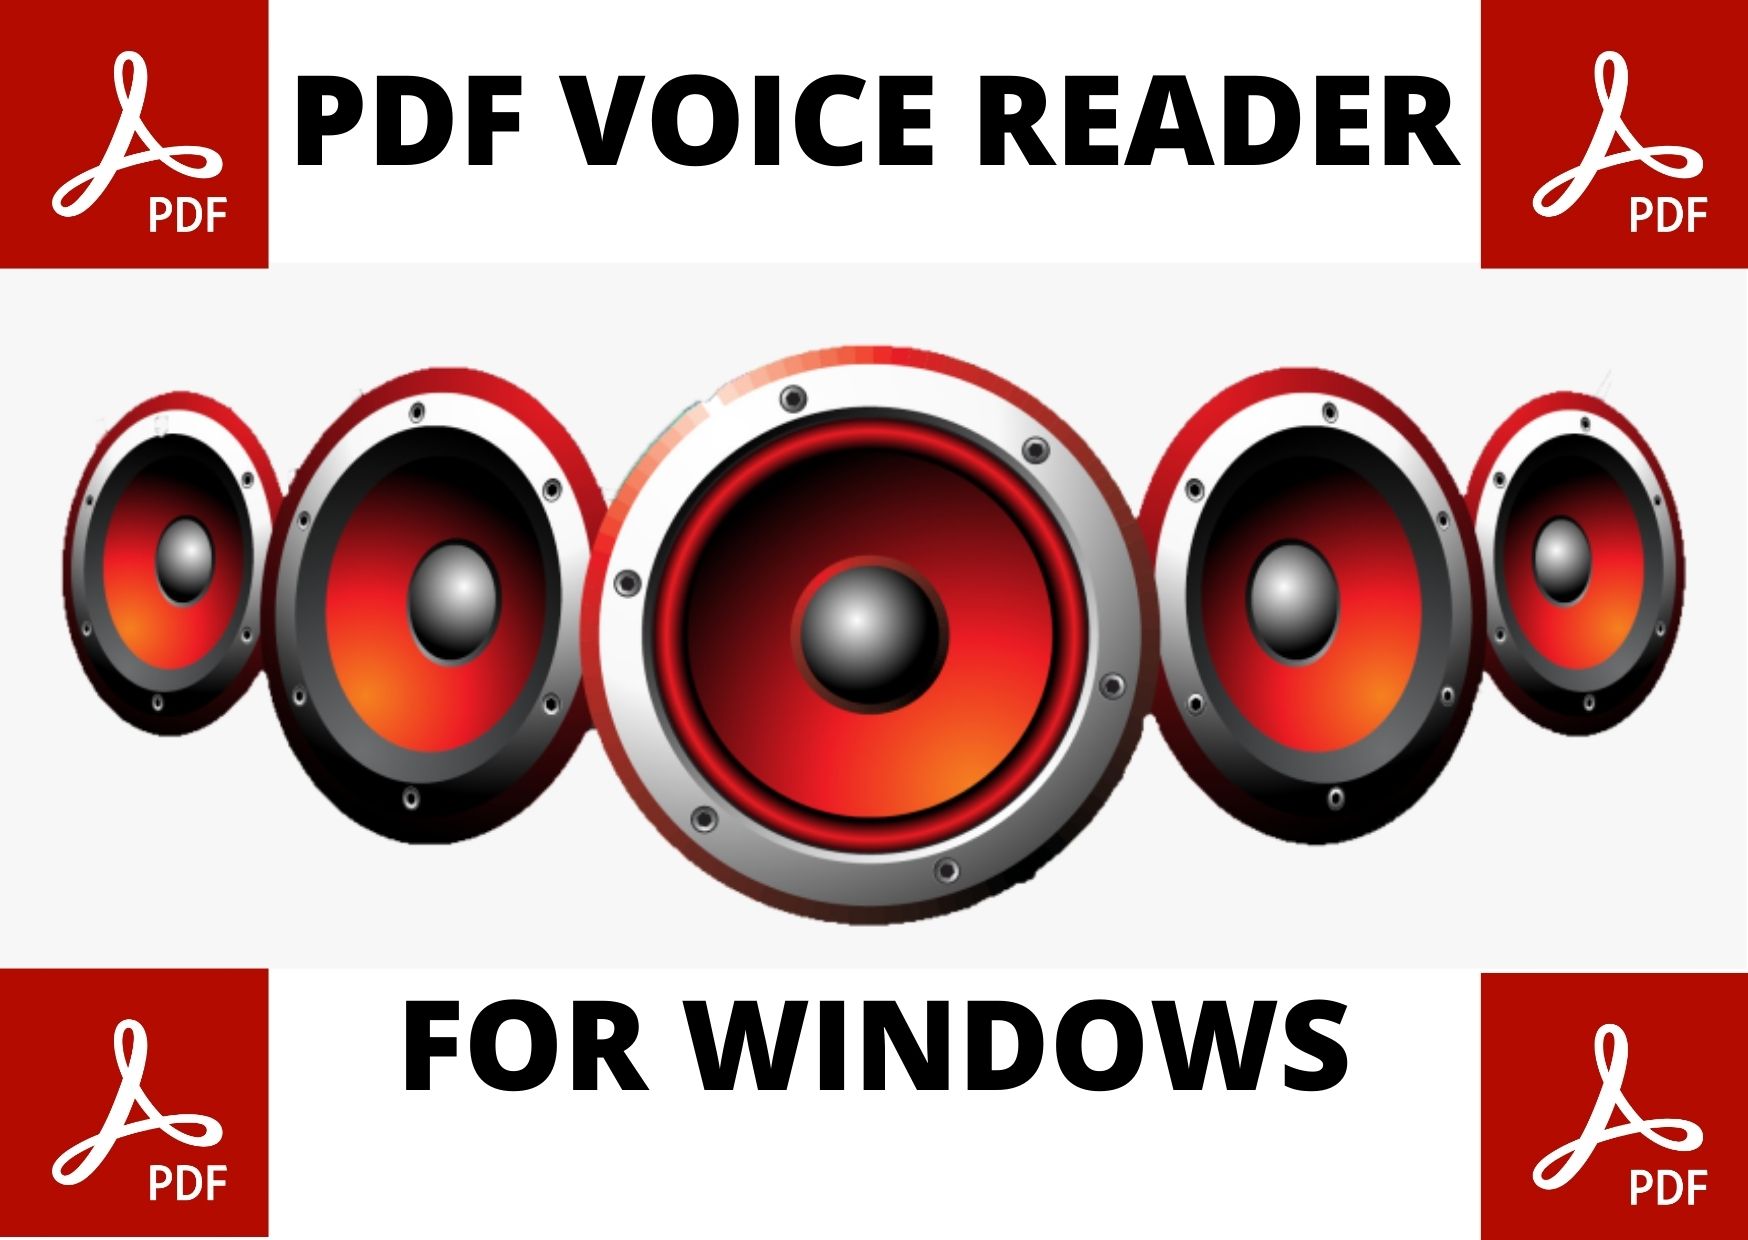 pdf voice reader for Windows